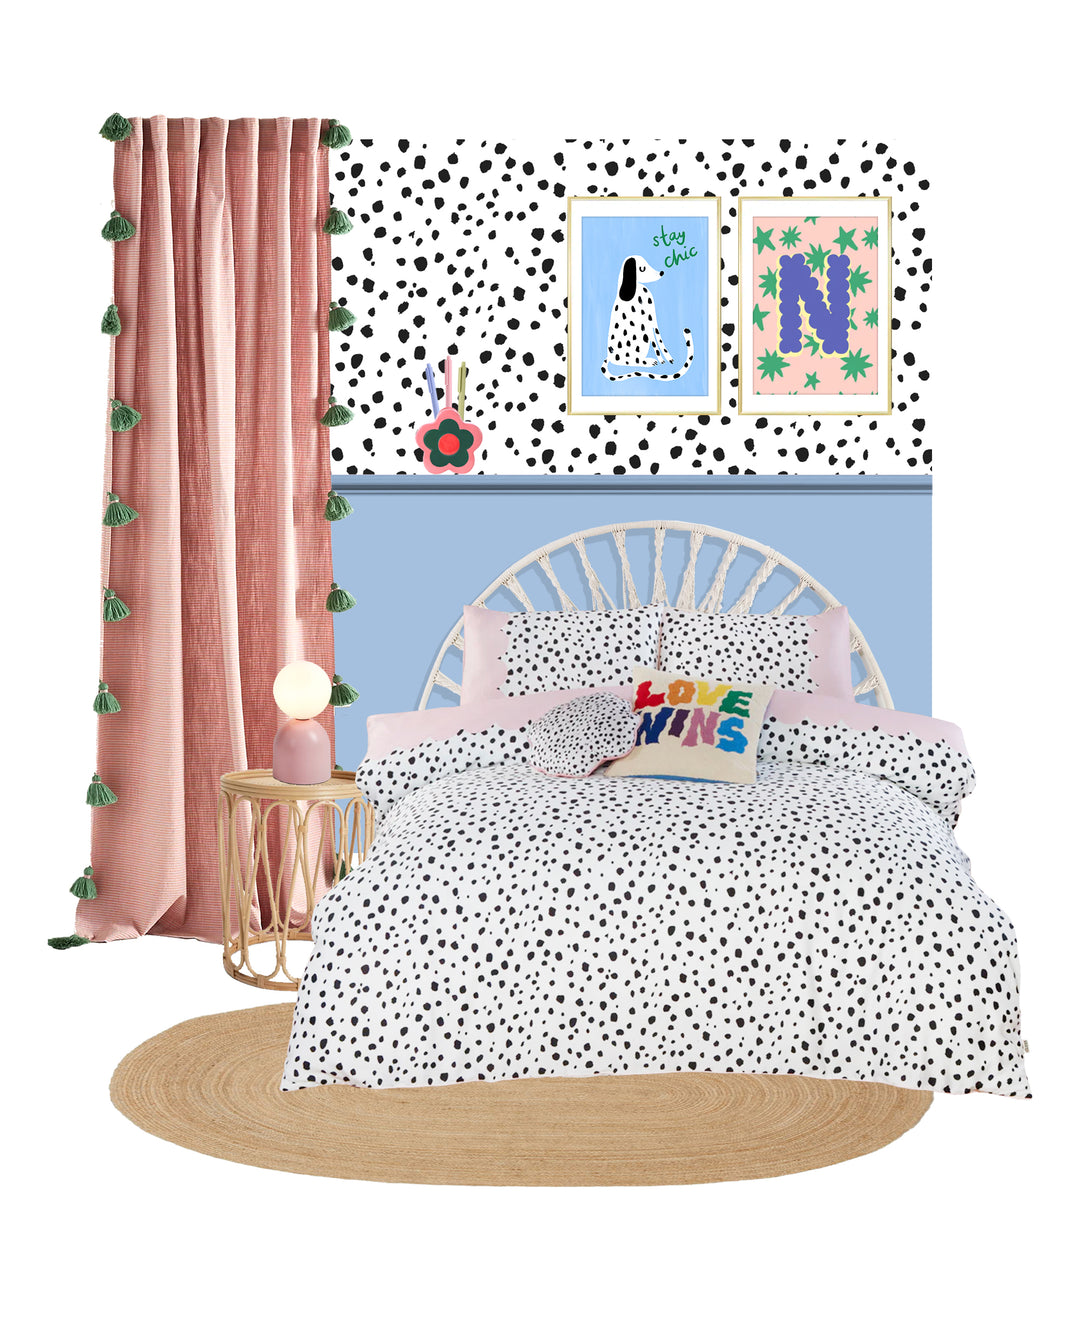 Bedroom Inspo: Dalmatian Dreamland